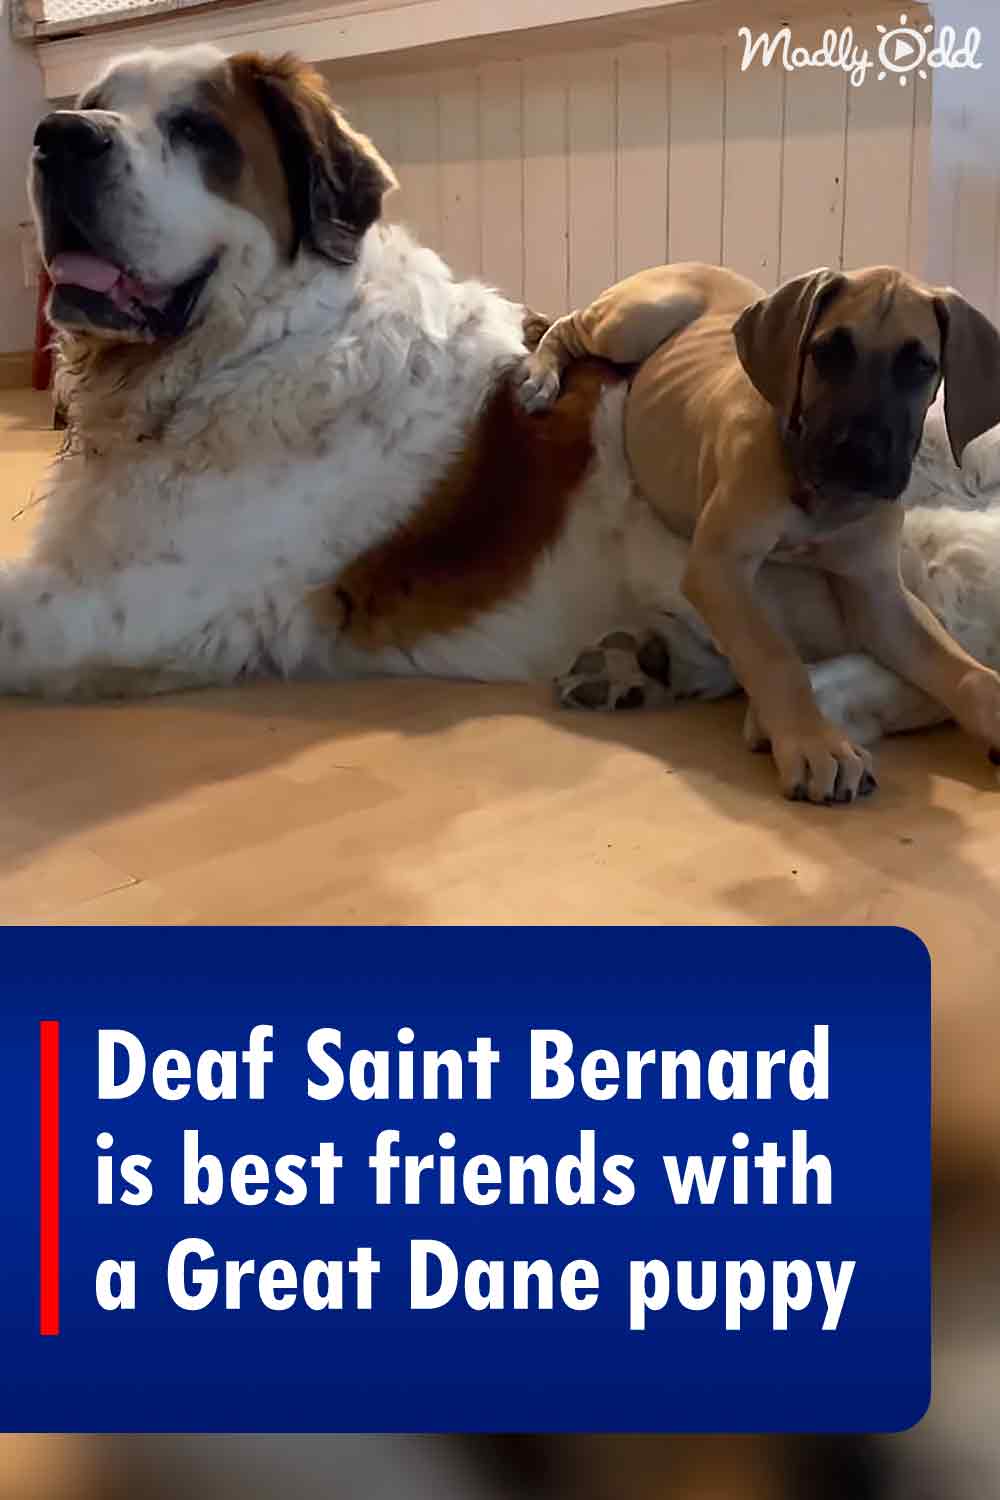 Deaf Saint Bernard is best friends with a Great Dane puppy